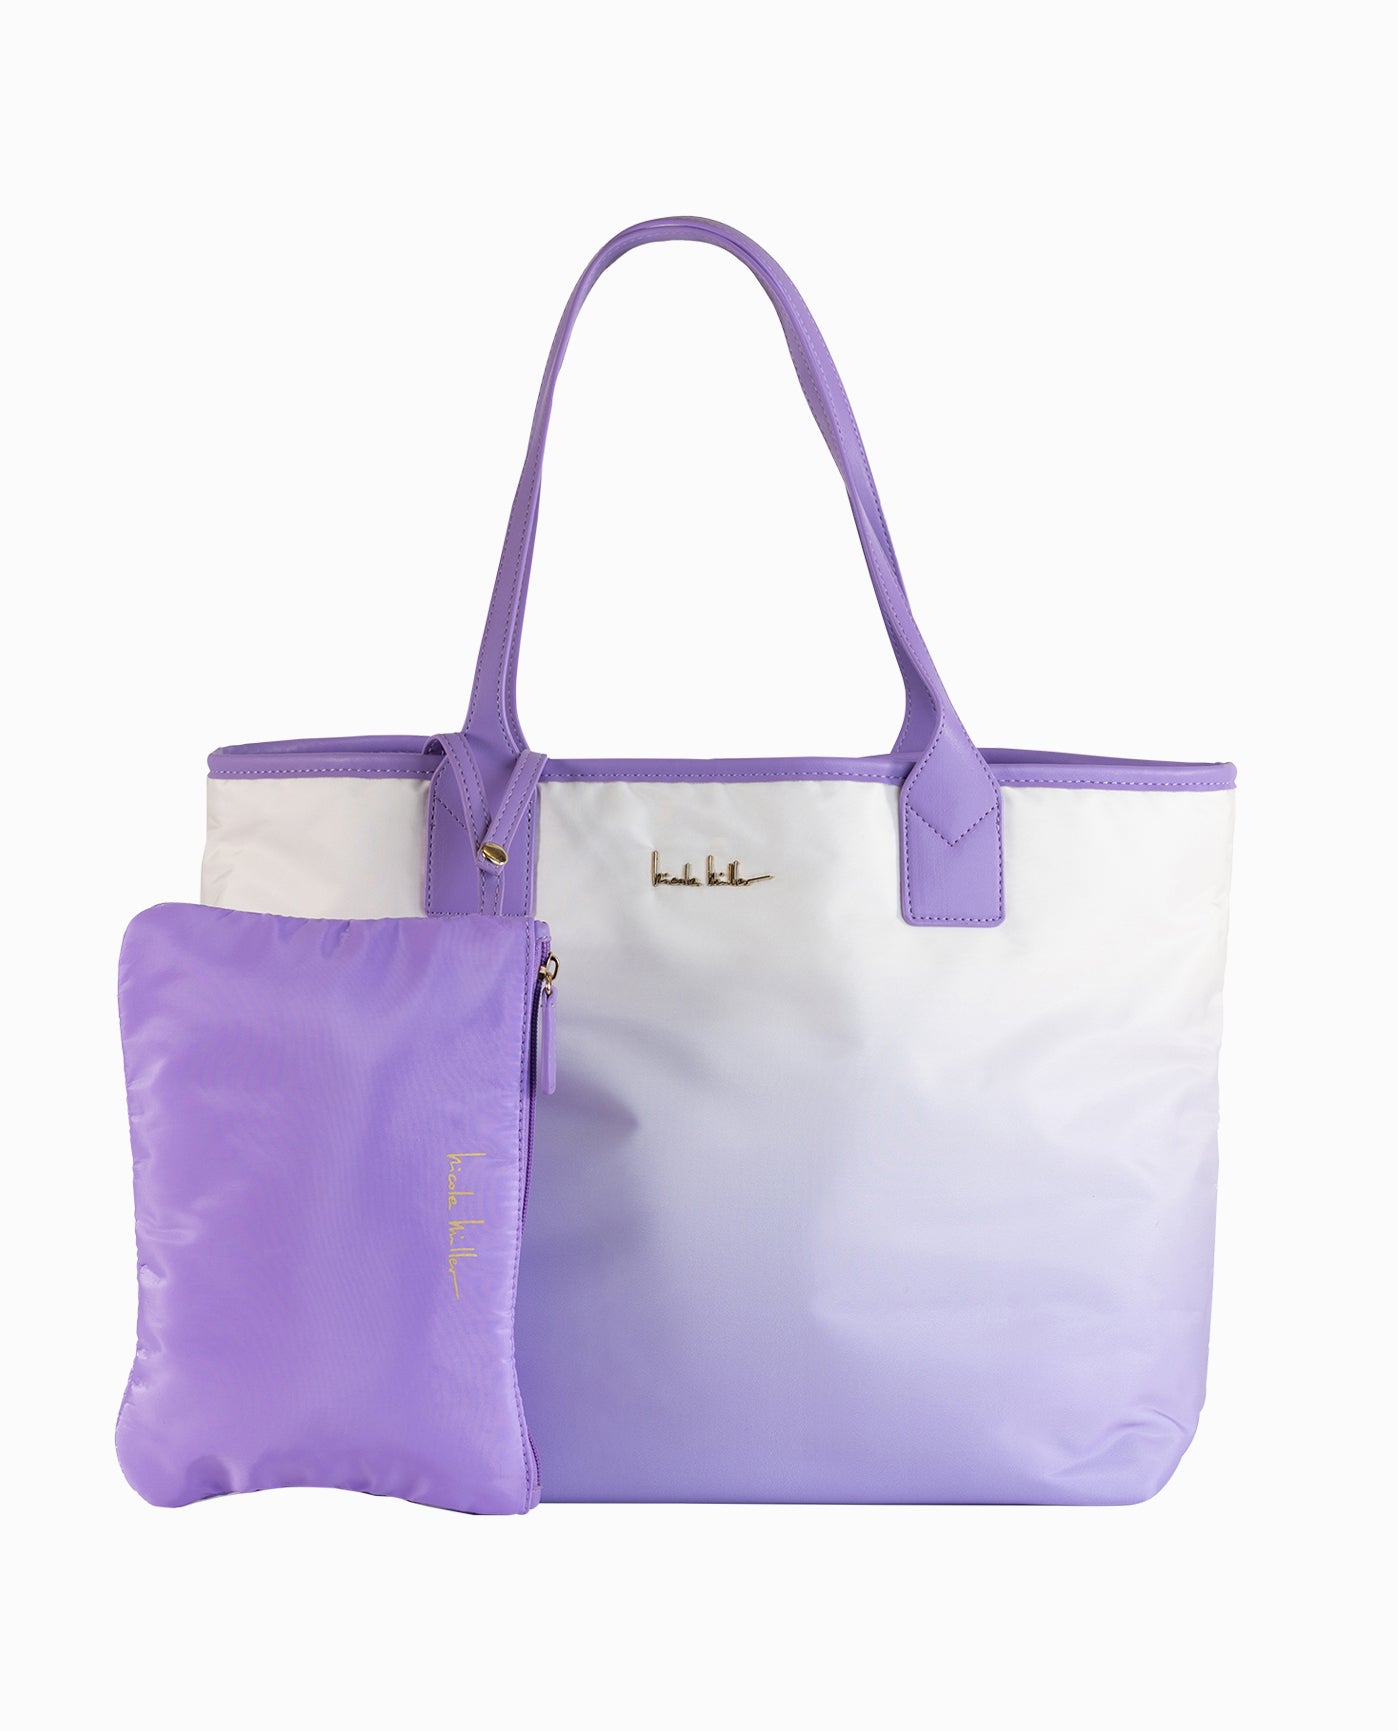 Sophie bag – purple and fuchsia leather | Figus Designer